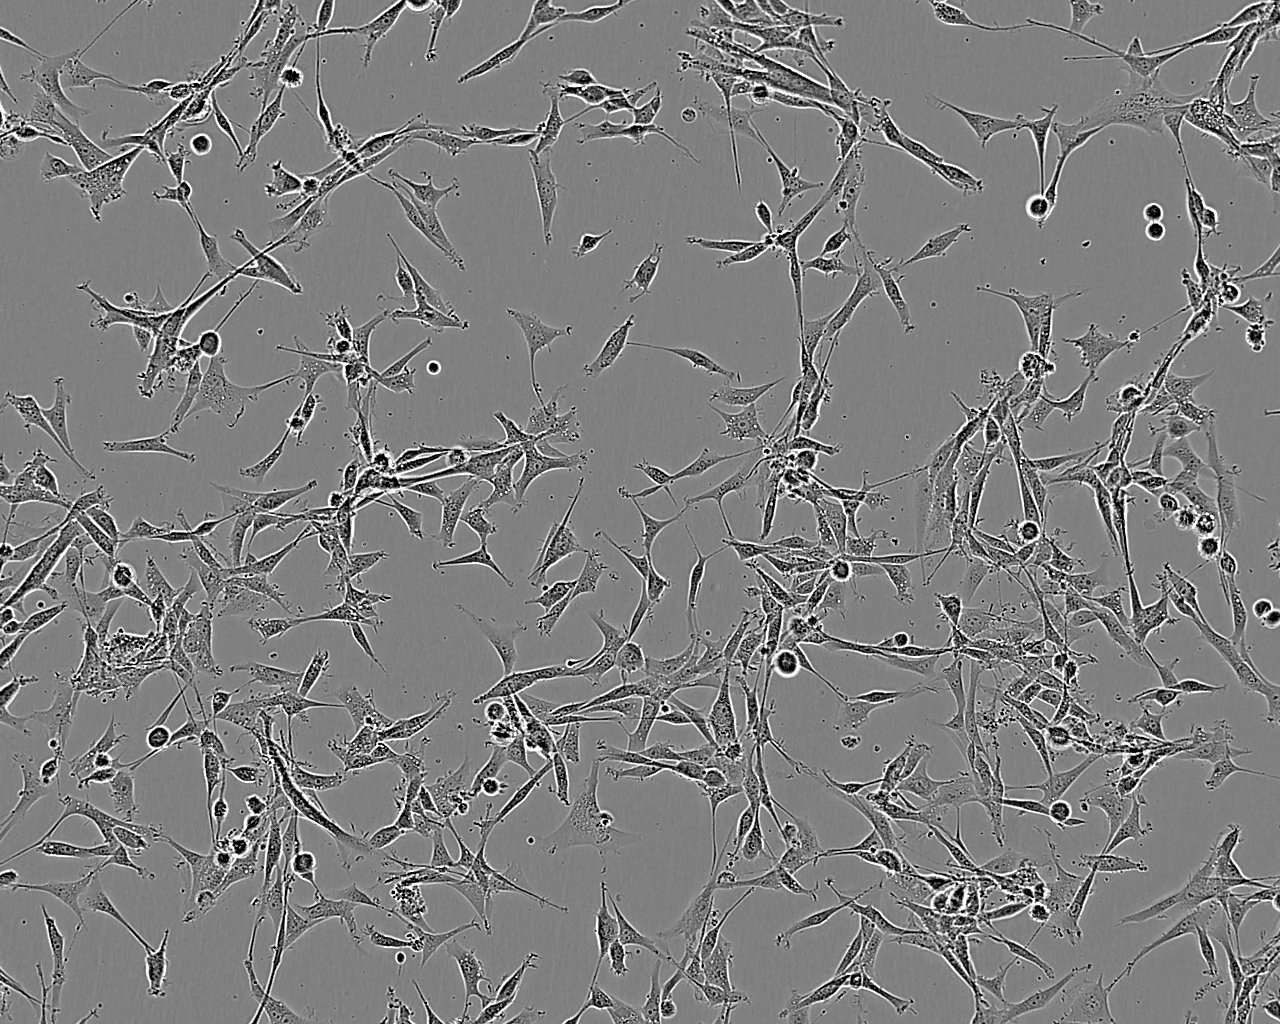 BT-483 epithelioid cells人乳腺导管癌细胞系,BT-483 epithelioid cells